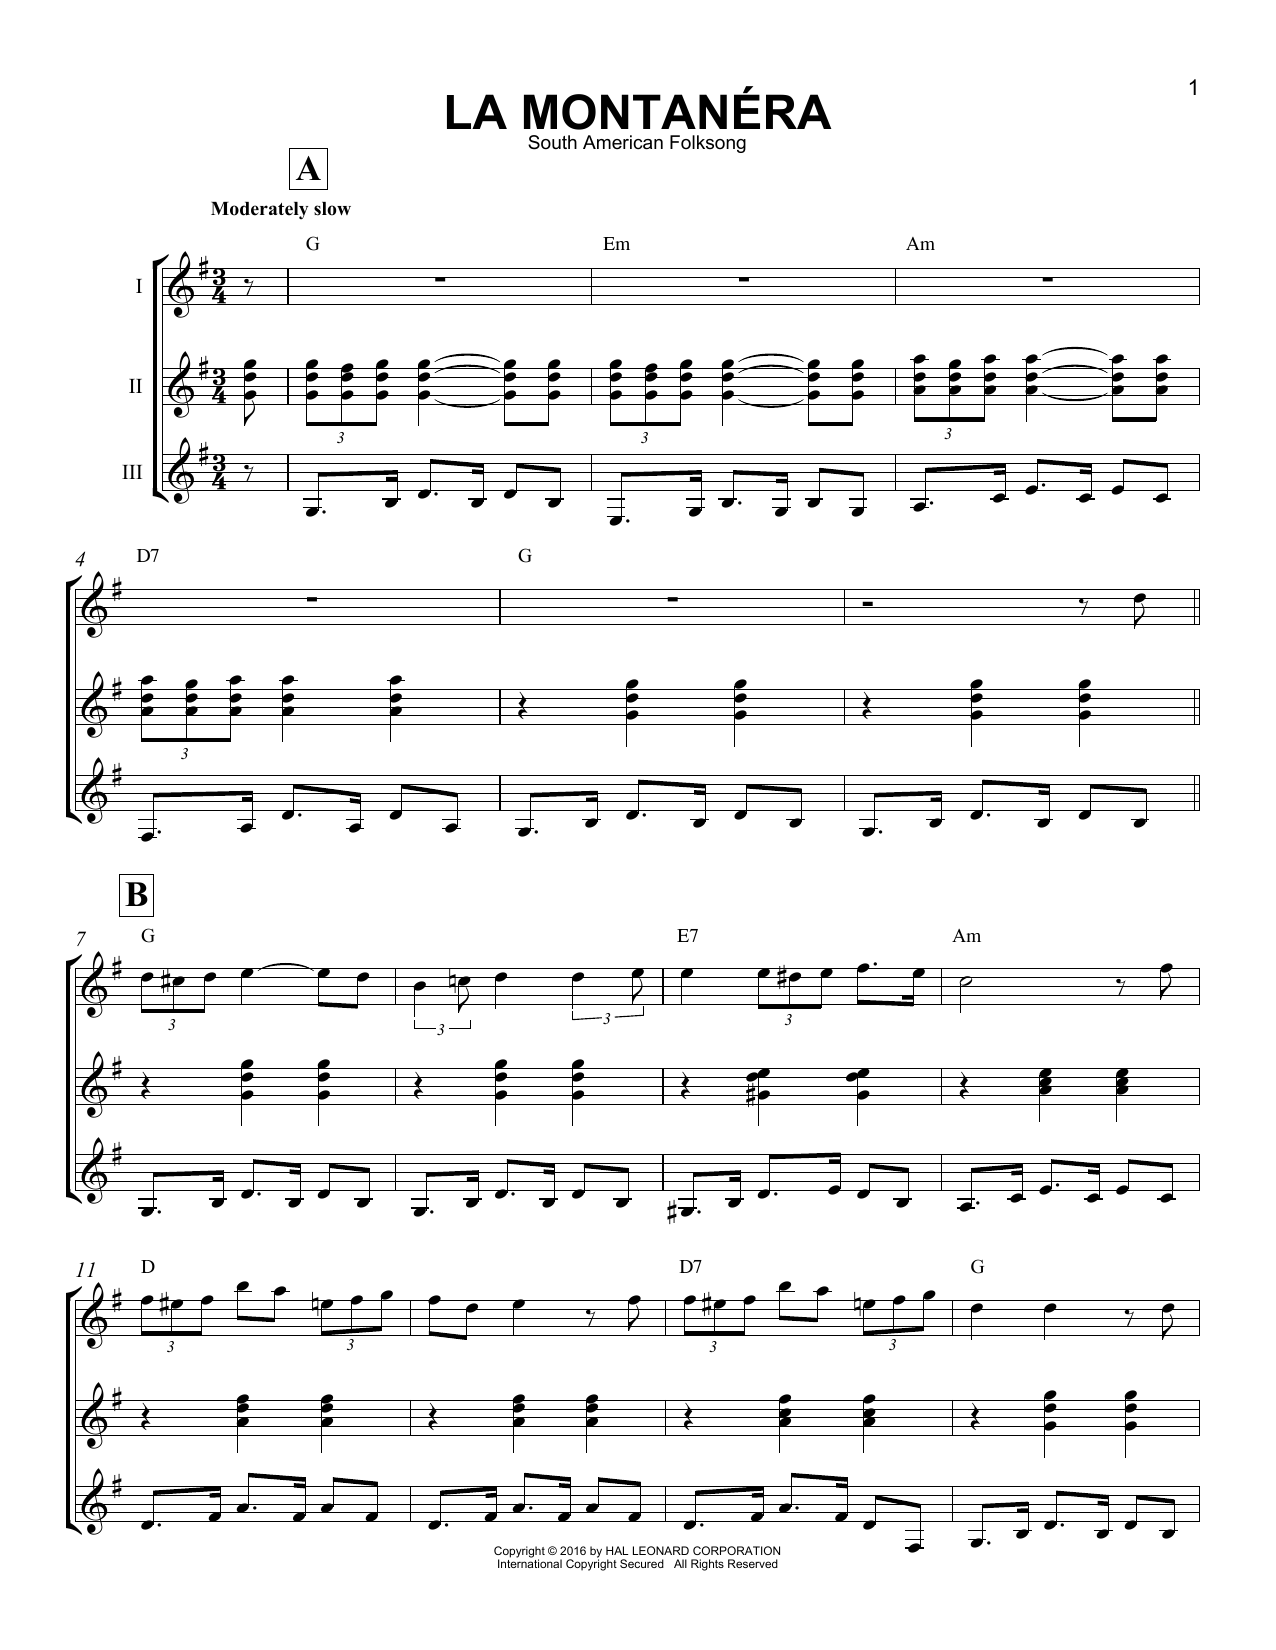 South American Folksong La Montanera Sheet Music Notes & Chords for Guitar Ensemble - Download or Print PDF